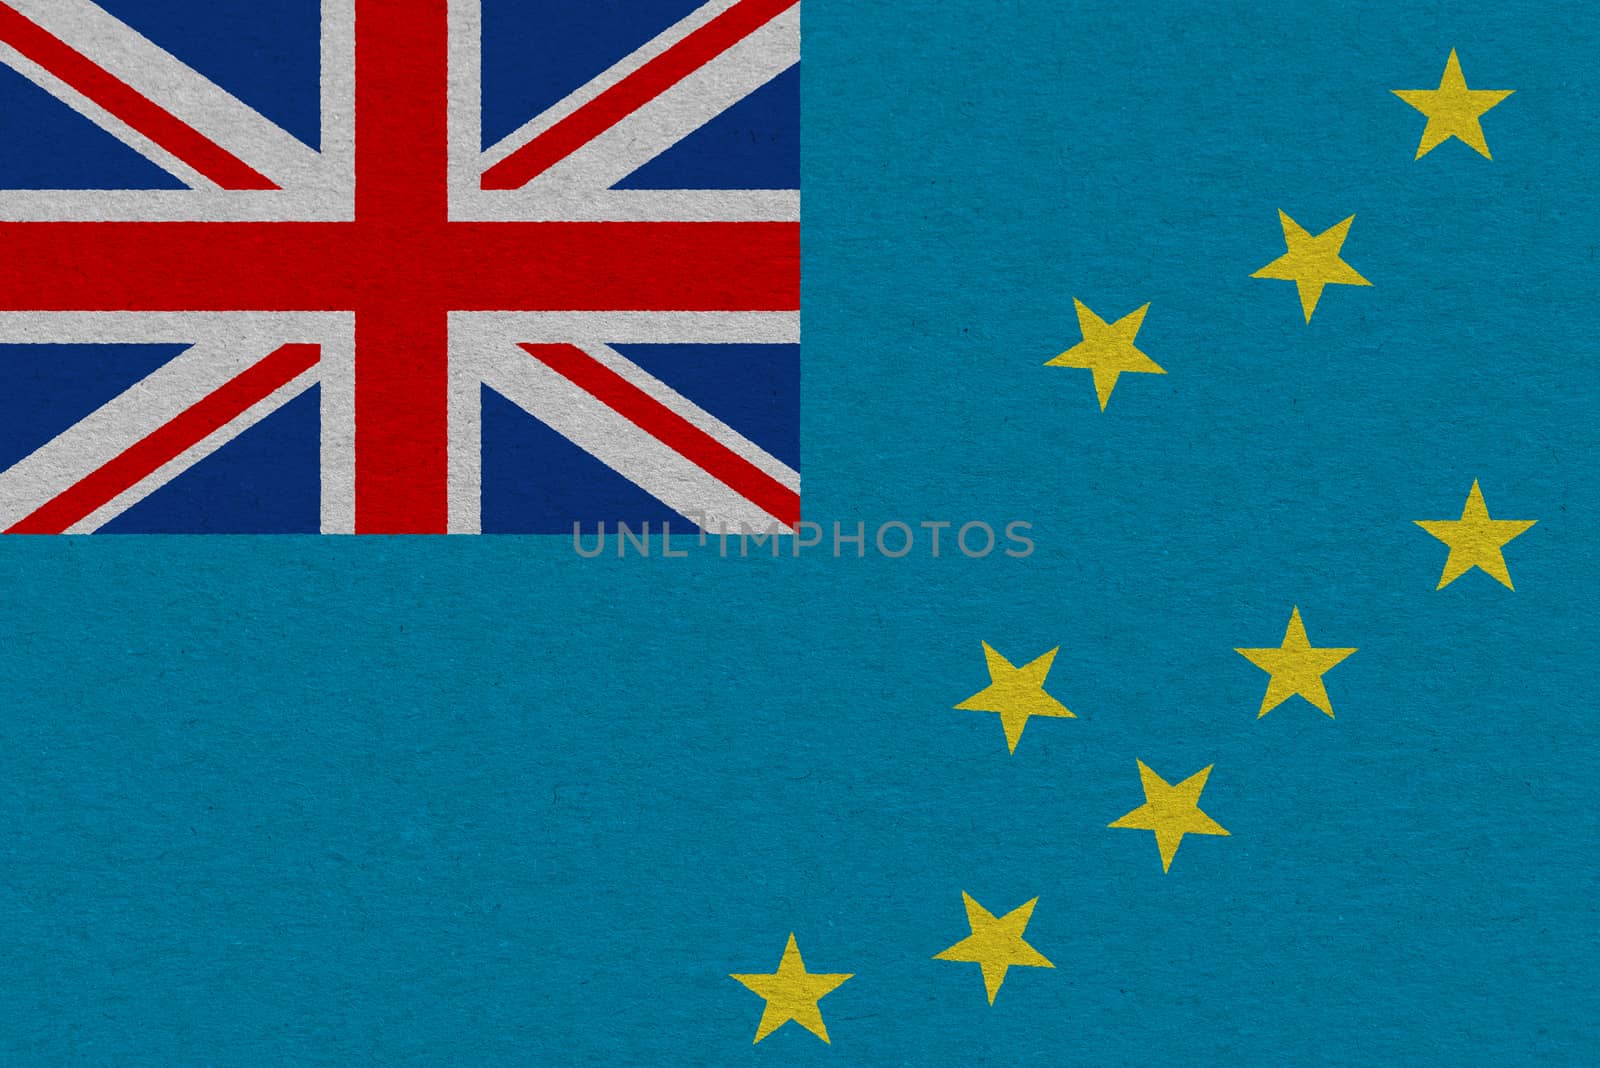 Tuvalu flag painted on paper. Patriotic background. National flag of Tuvalu